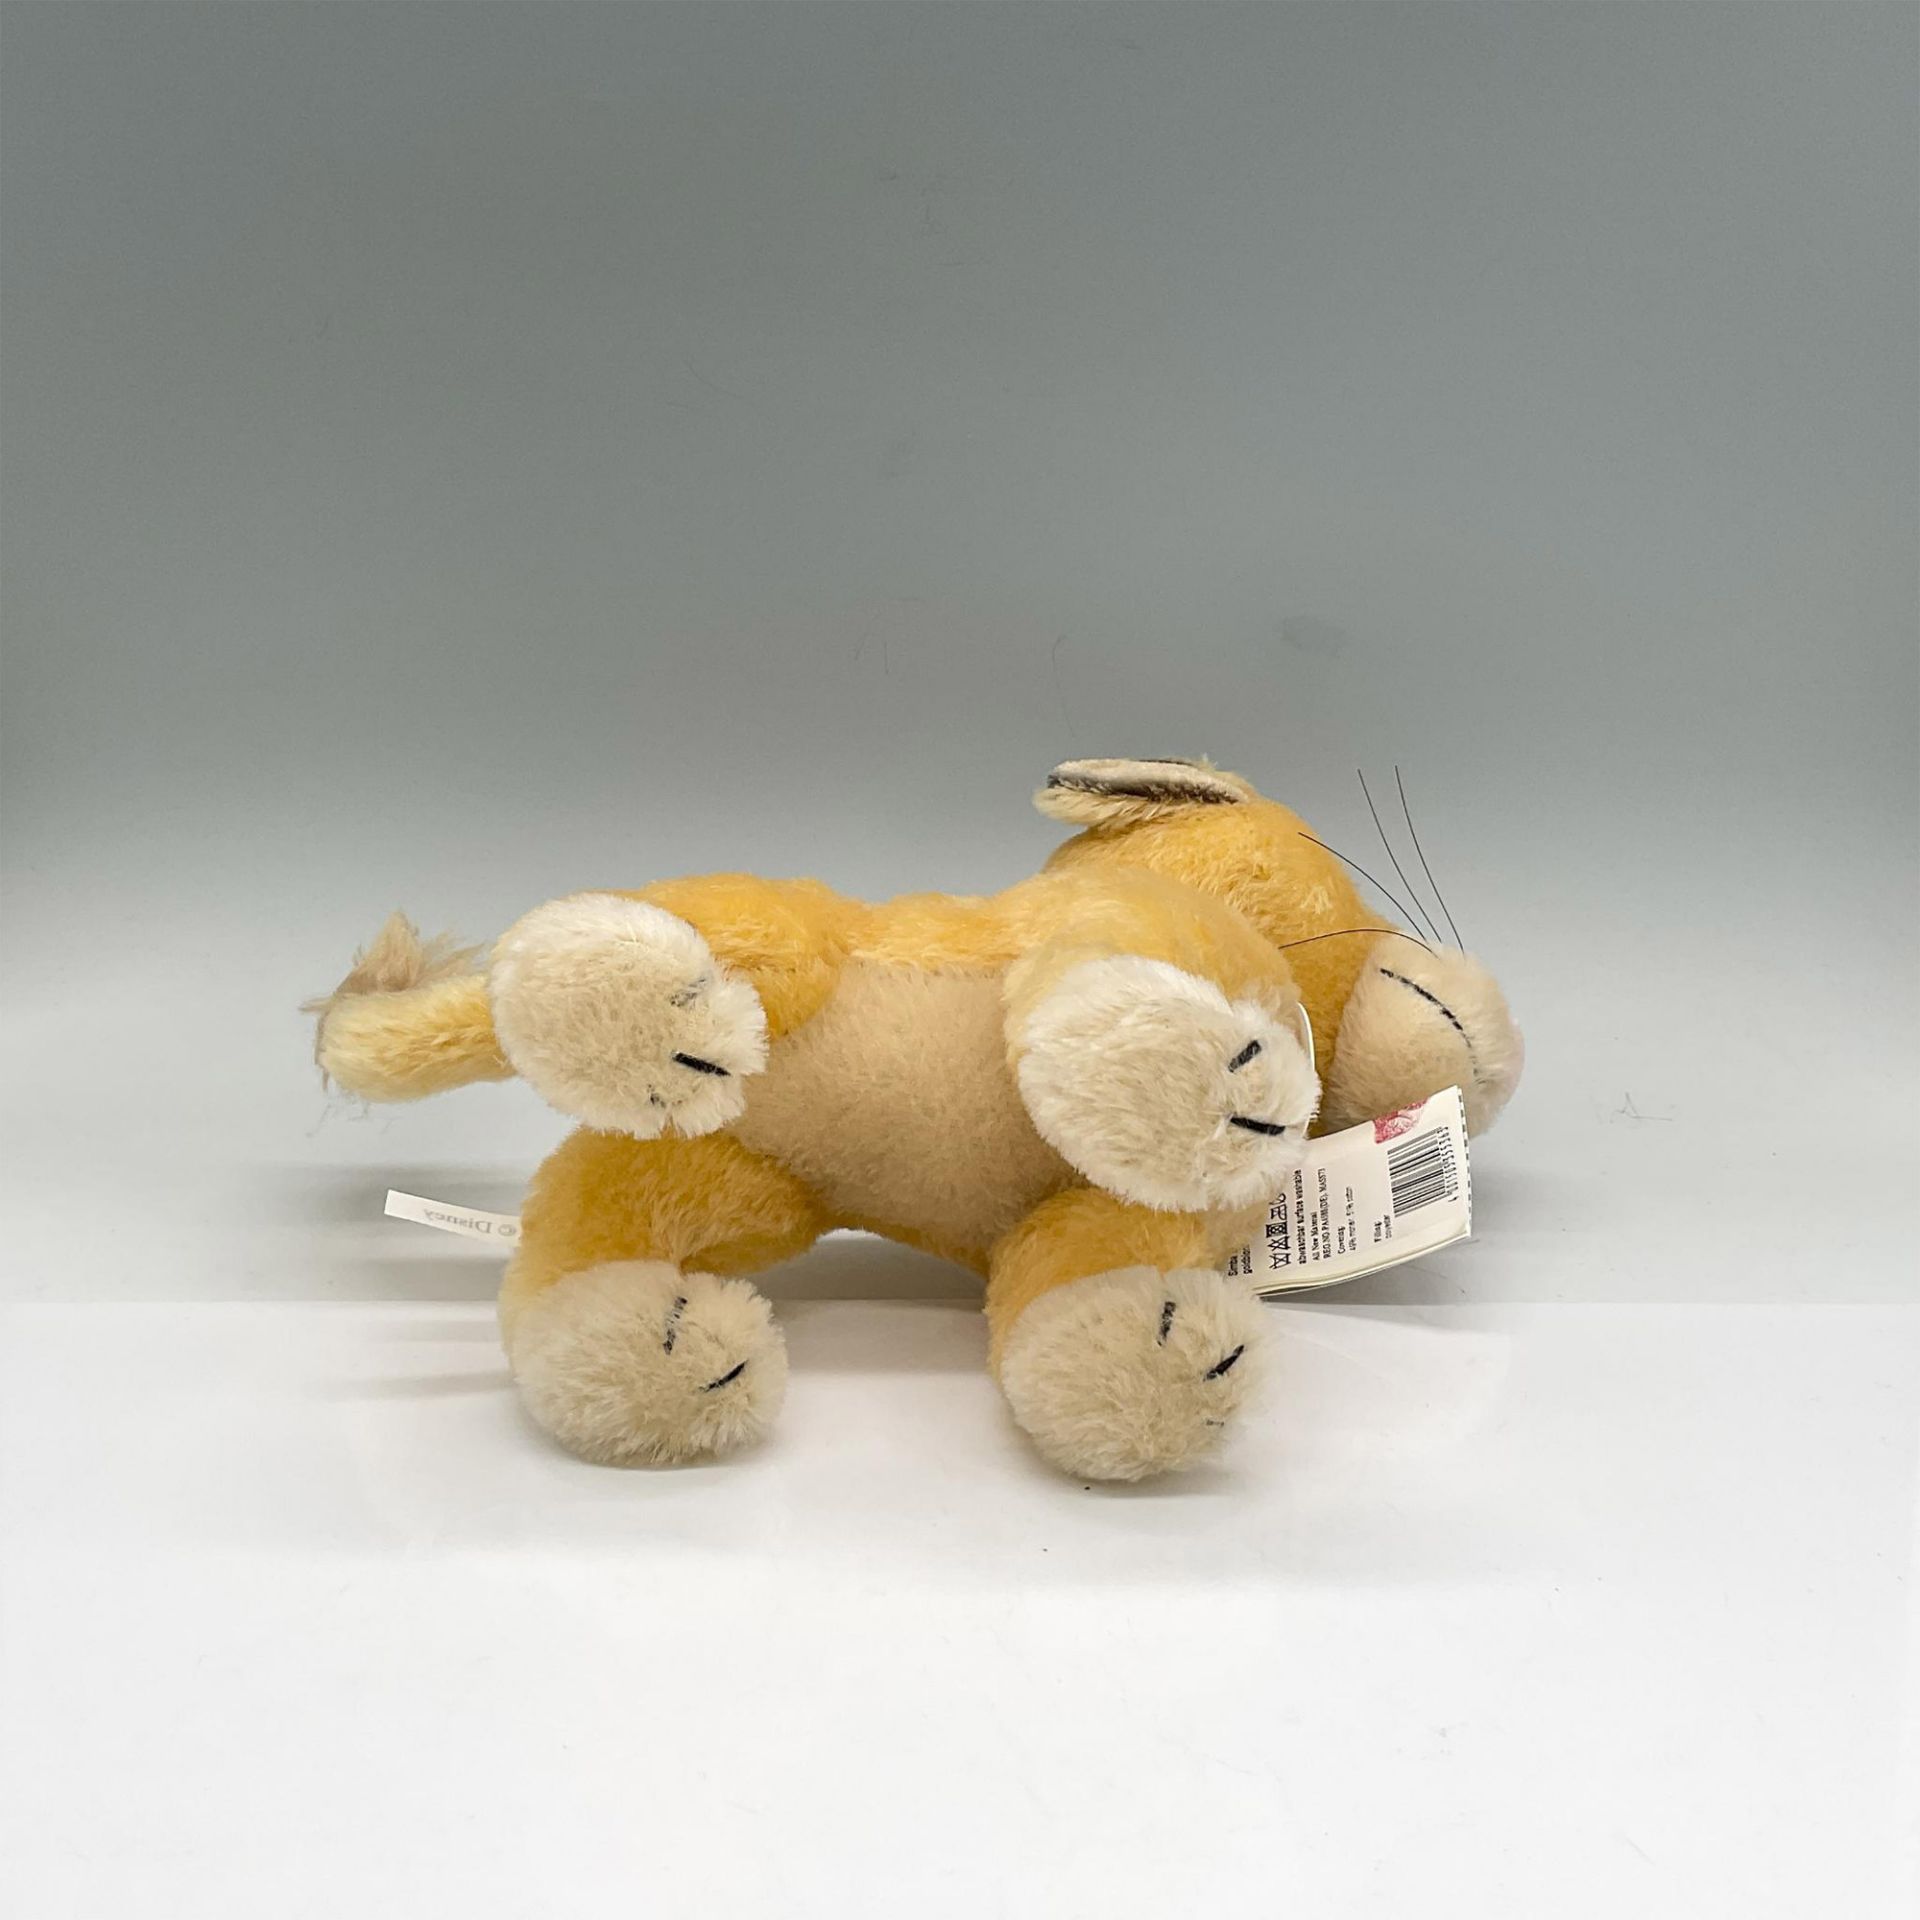 Steiff Mohair Stuffed Figure, Simba of Lion King - Image 4 of 4